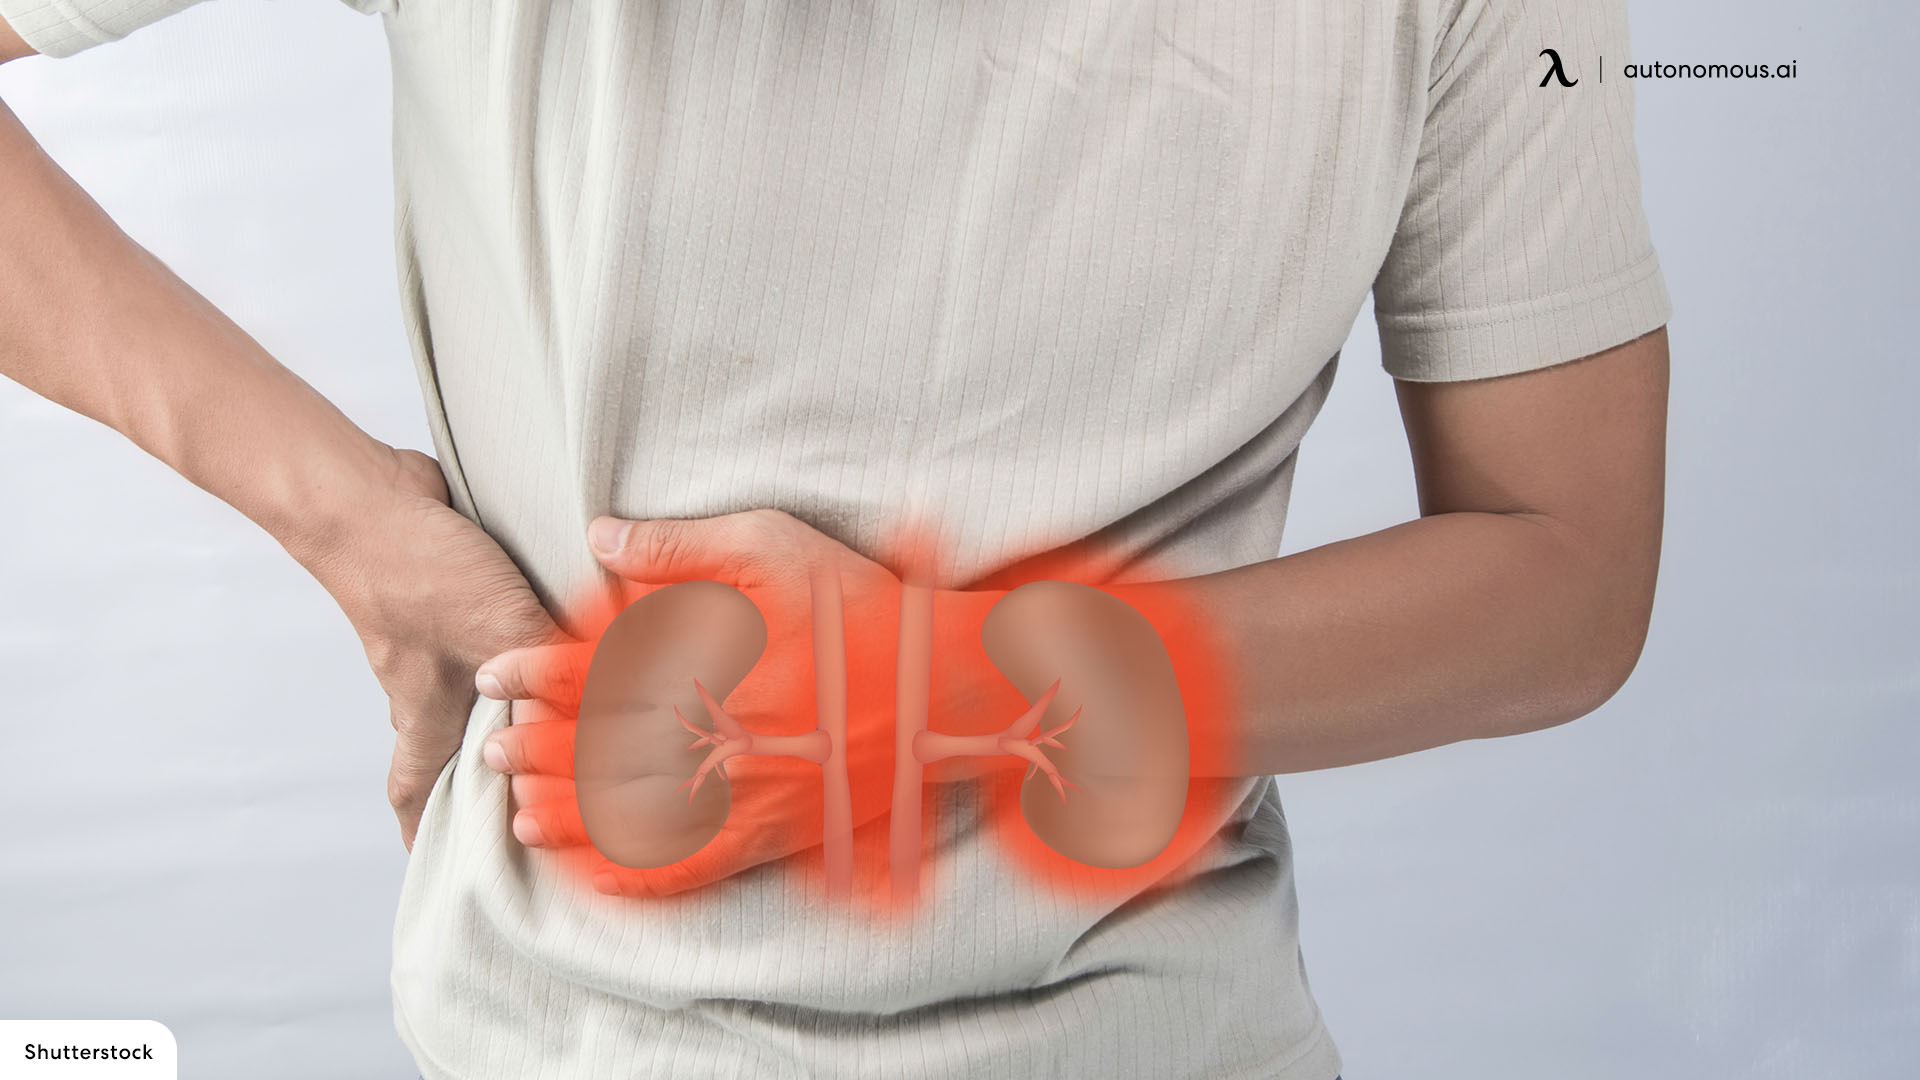 Symptoms of kidney pain when sitting